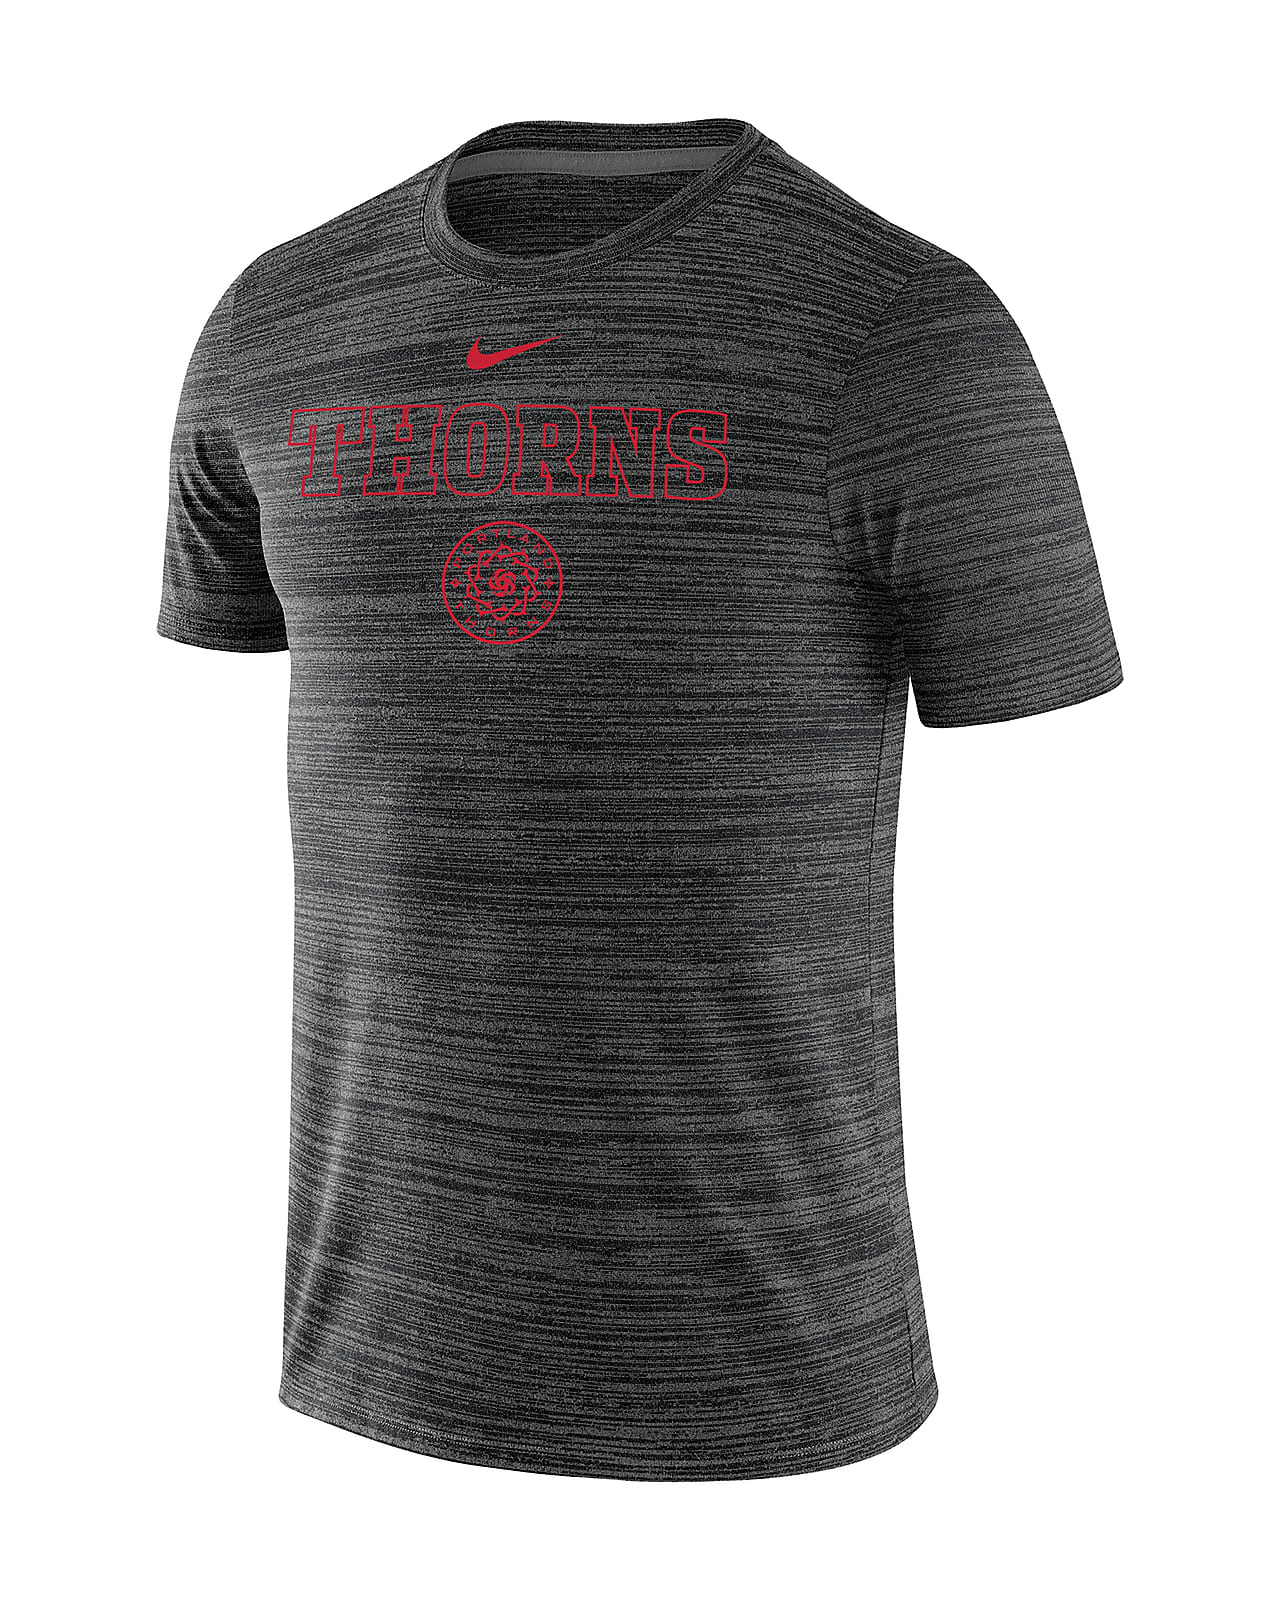 Portland Thorns Velocity Legend Men's Nike Soccer T-Shirt